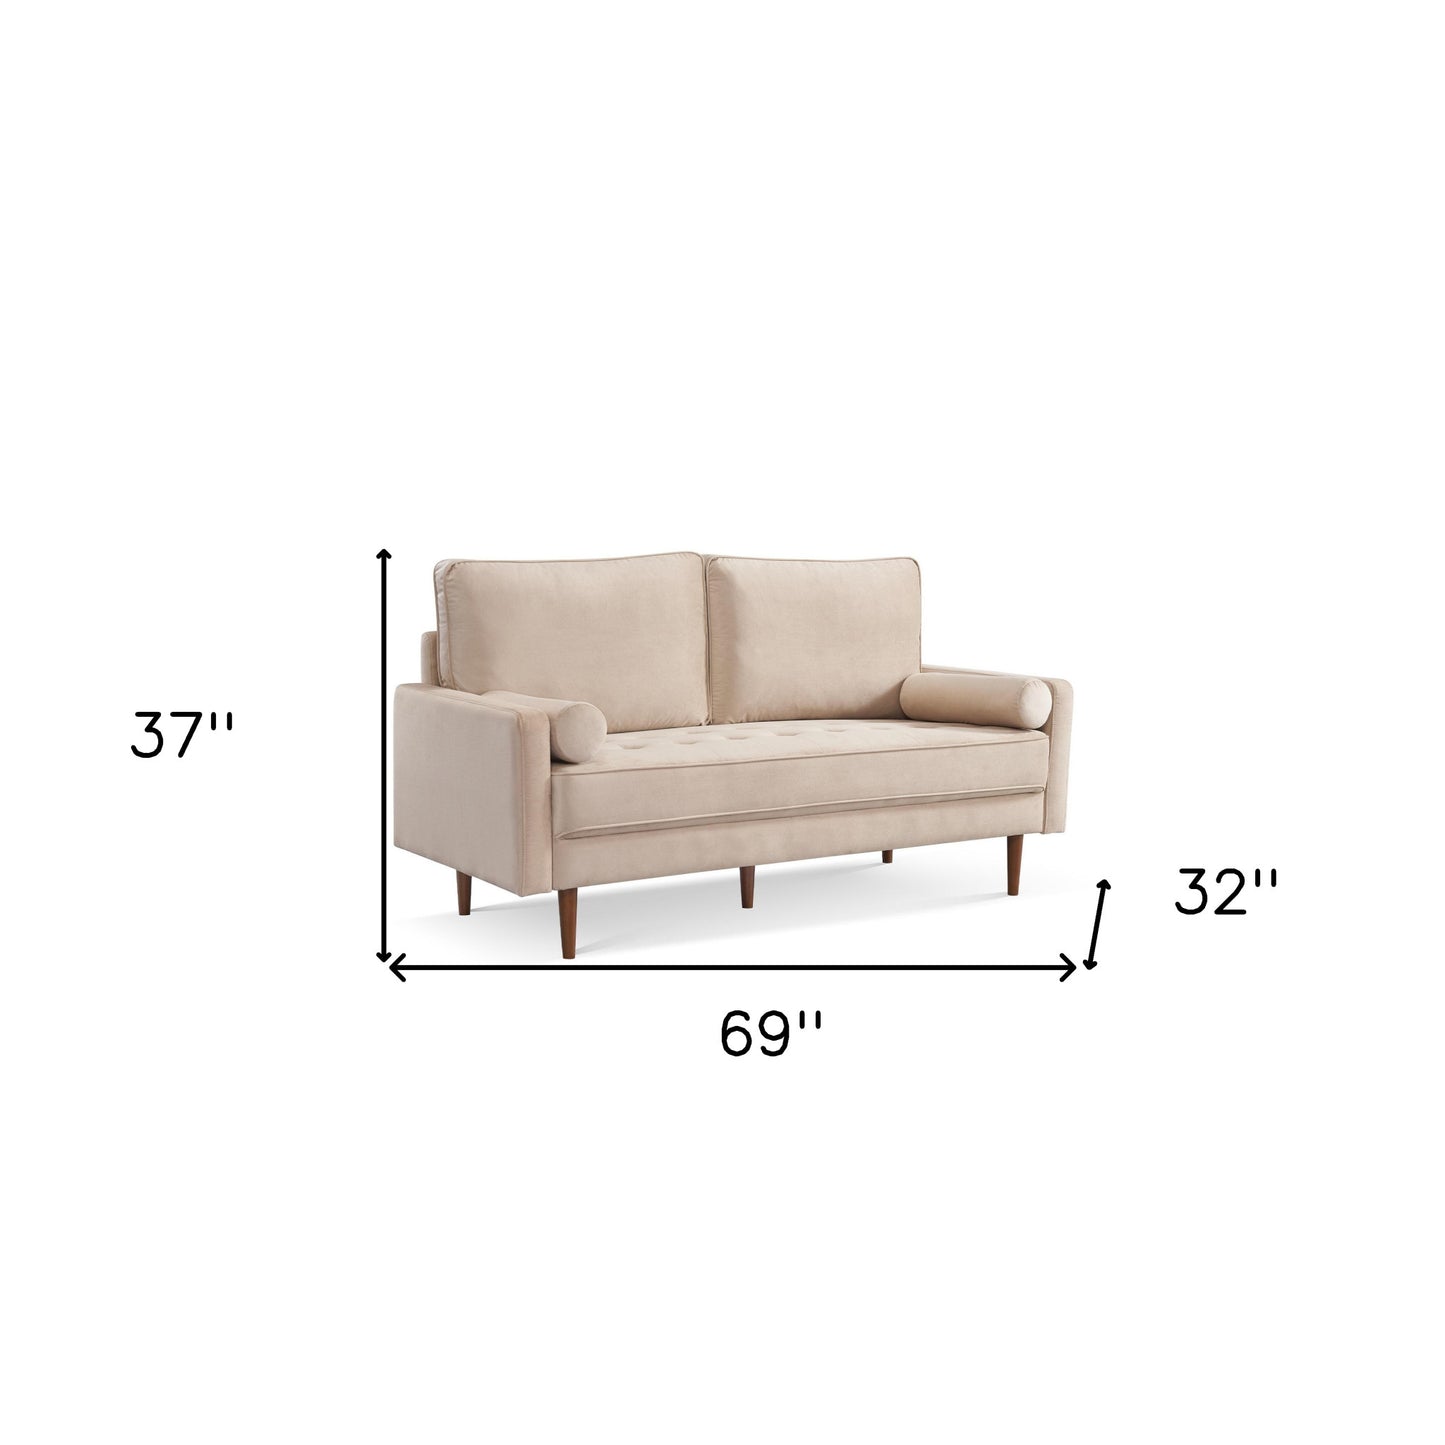 69" Beige Velvet Sofa And Toss Pillows With Dark Brown Legs